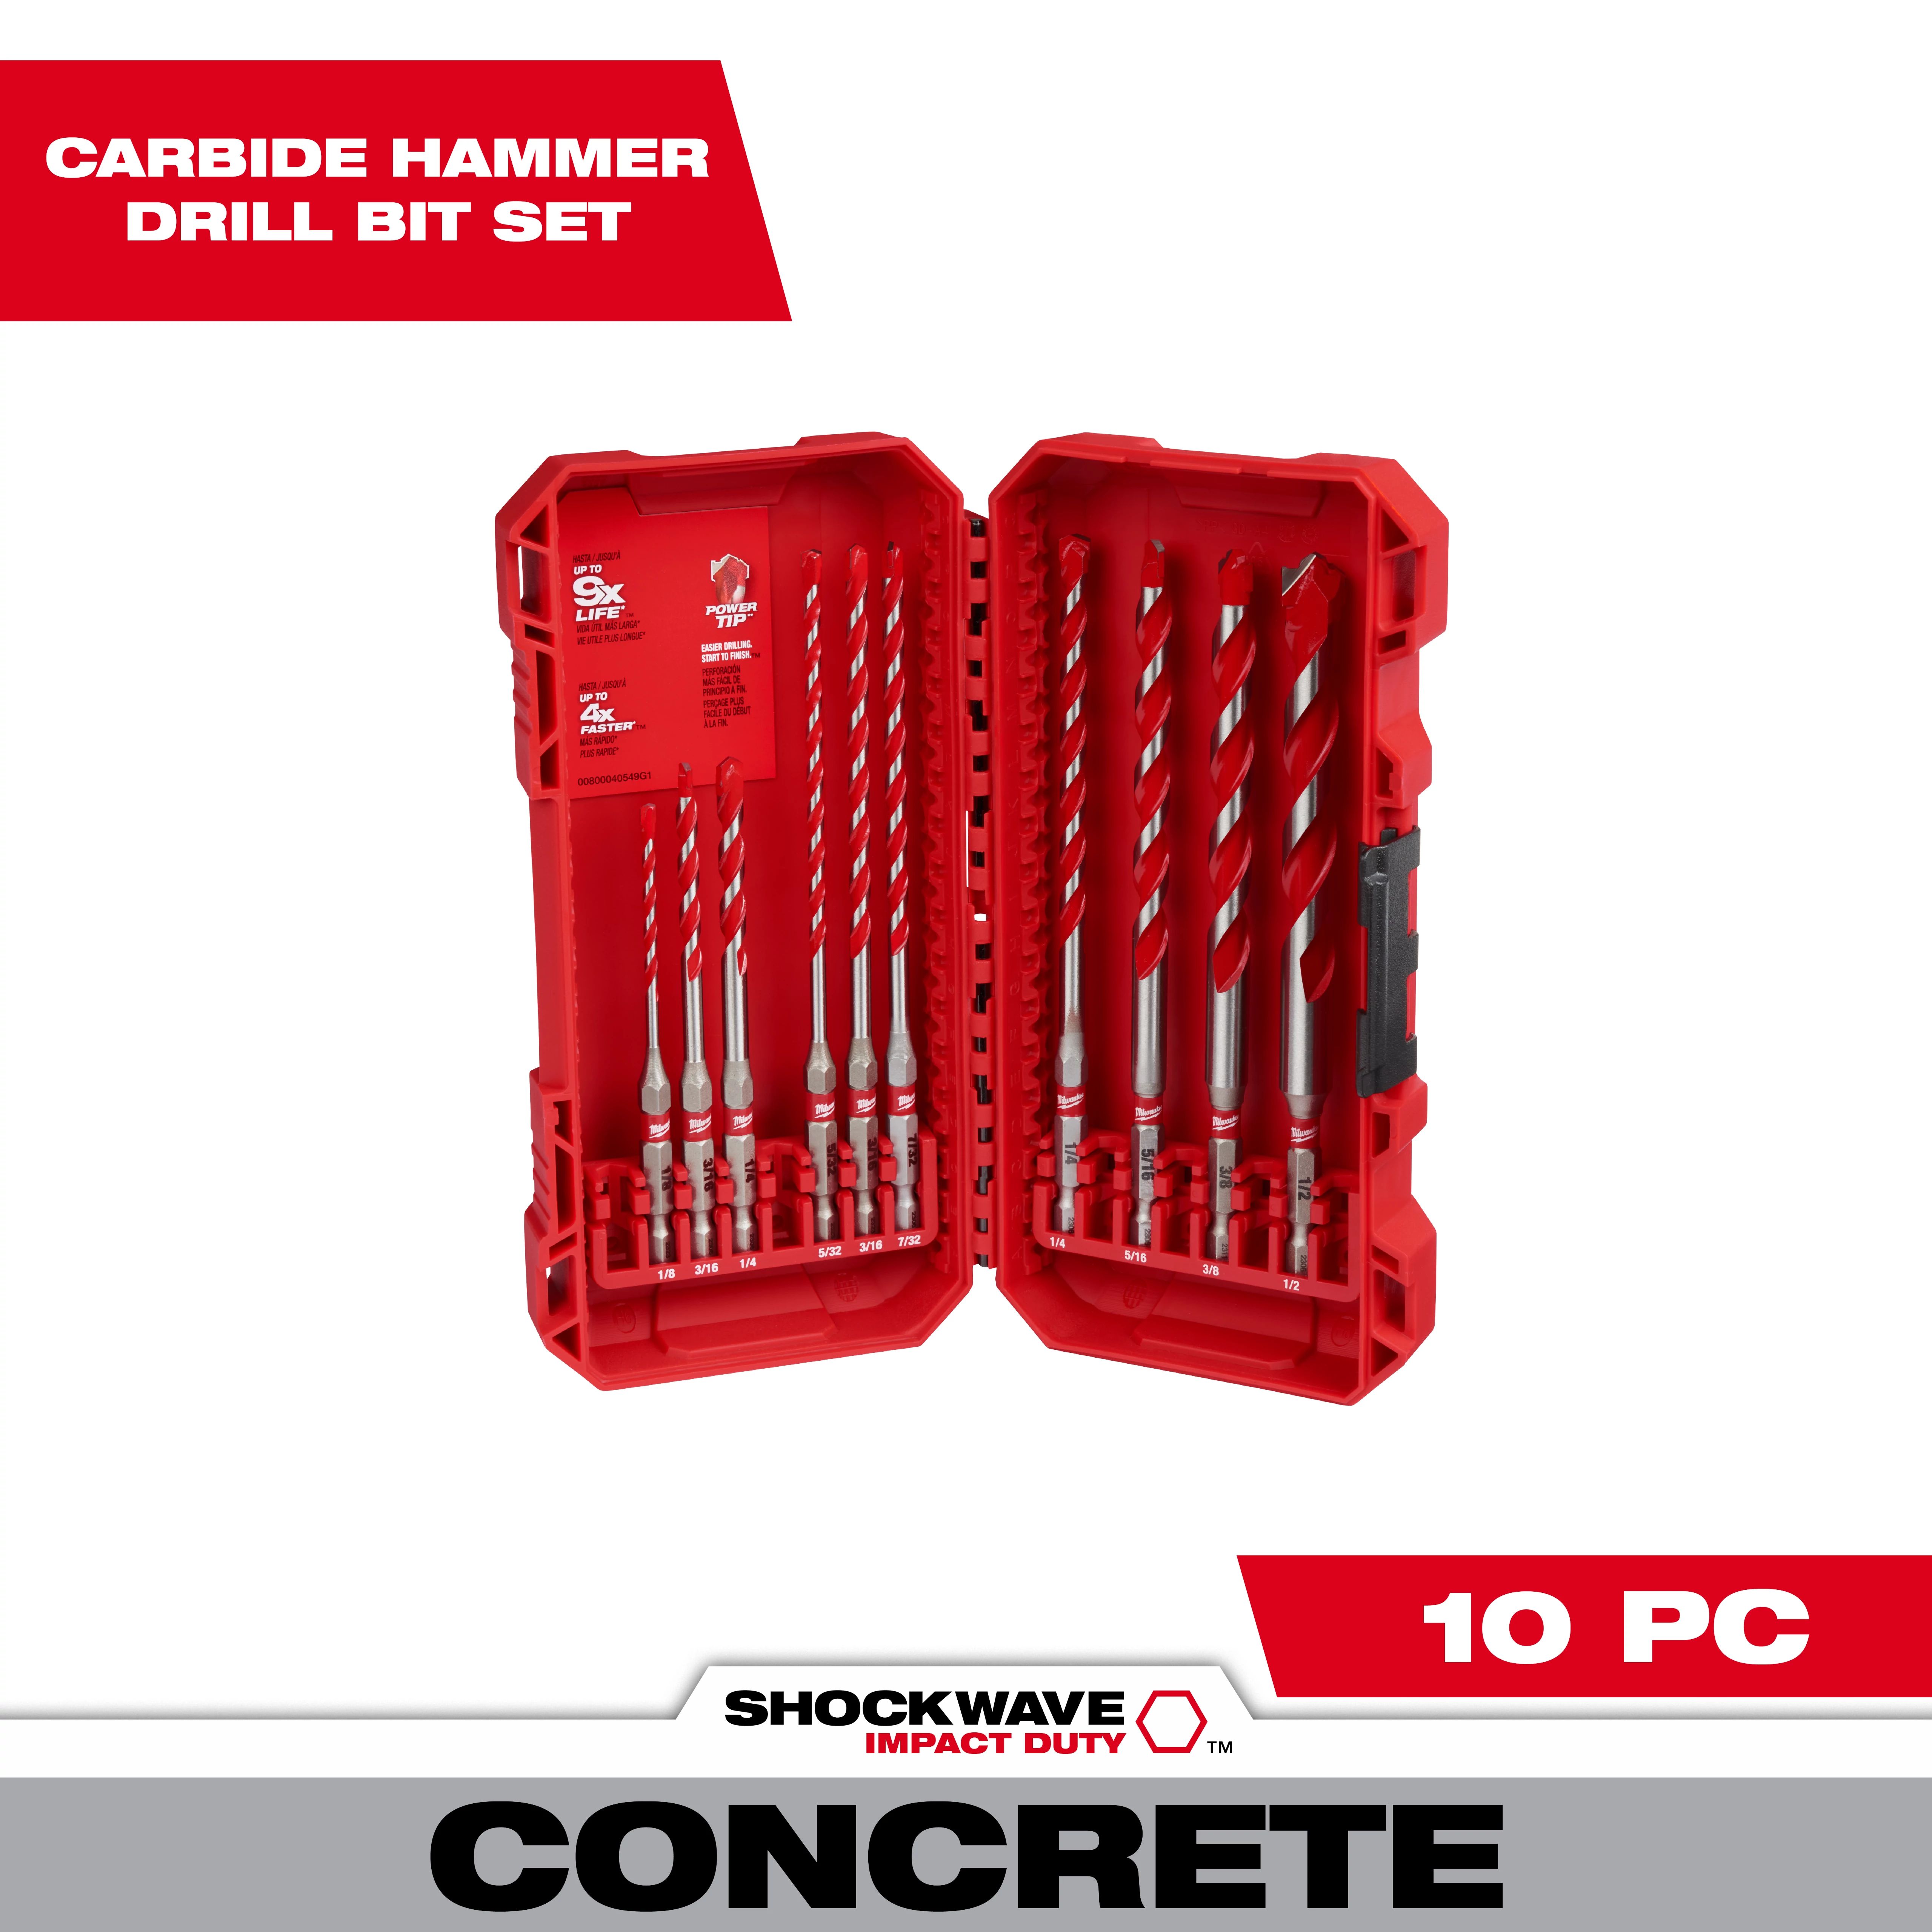 10PC. SHOCKWAVE Impact Duty™ Carbide Hammer Drill Bit Set